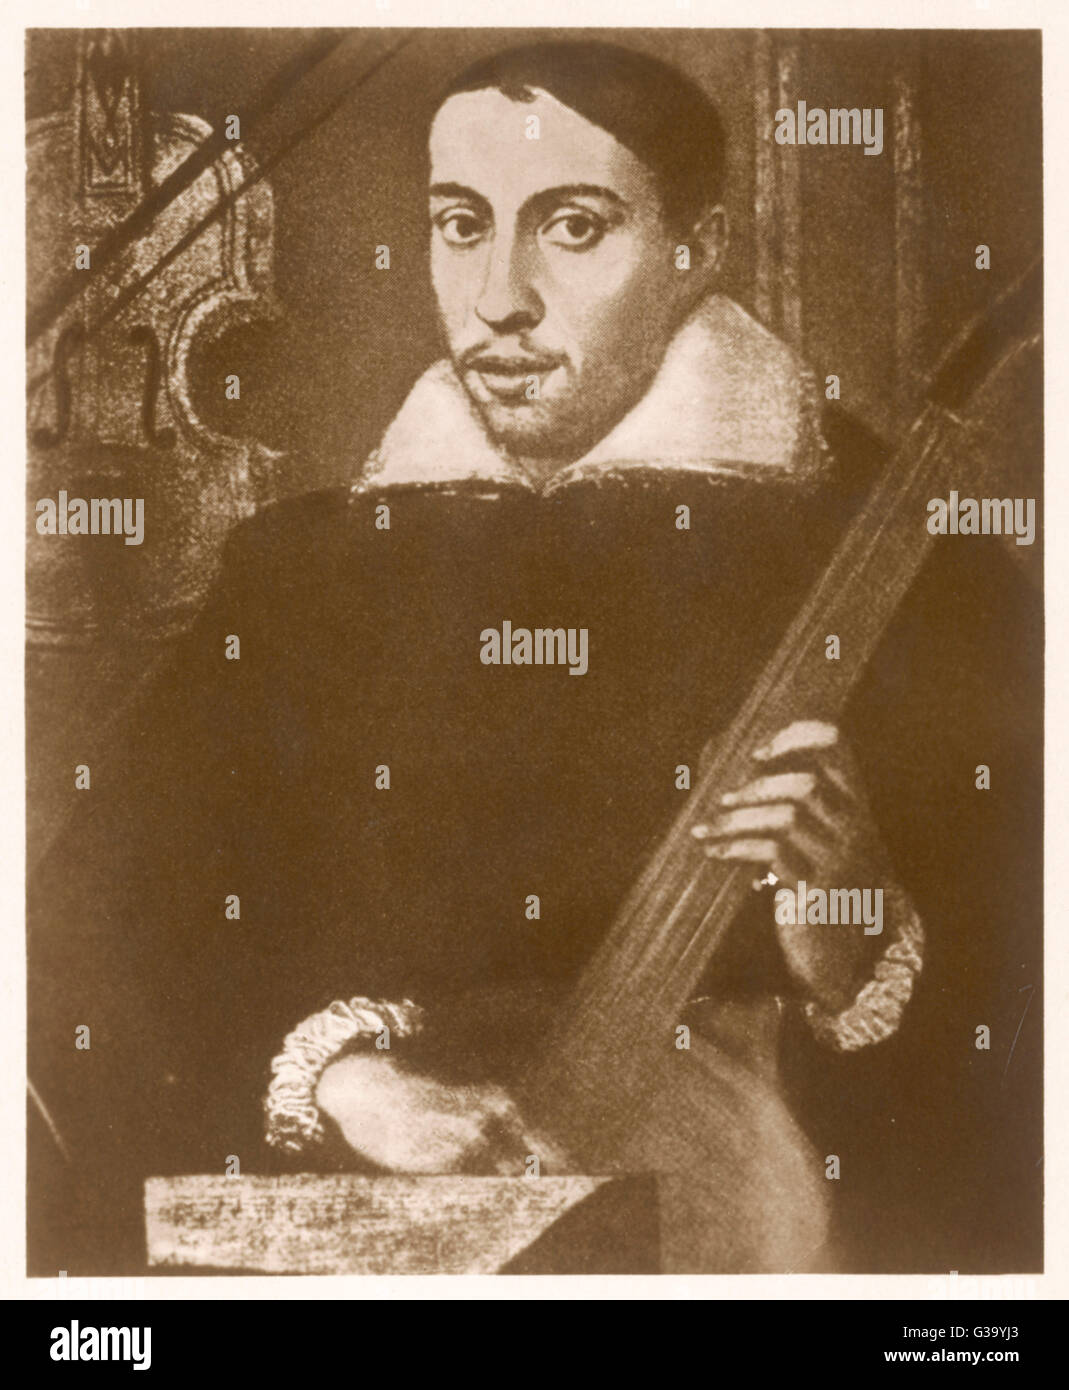 ANTONIUS STRADIVARIUS or ANTONIO STRADIVARI Italian violin maker of  Cremona; he also made other stringed instruments Date: ?1644 - 1737 Stock  Photo - Alamy